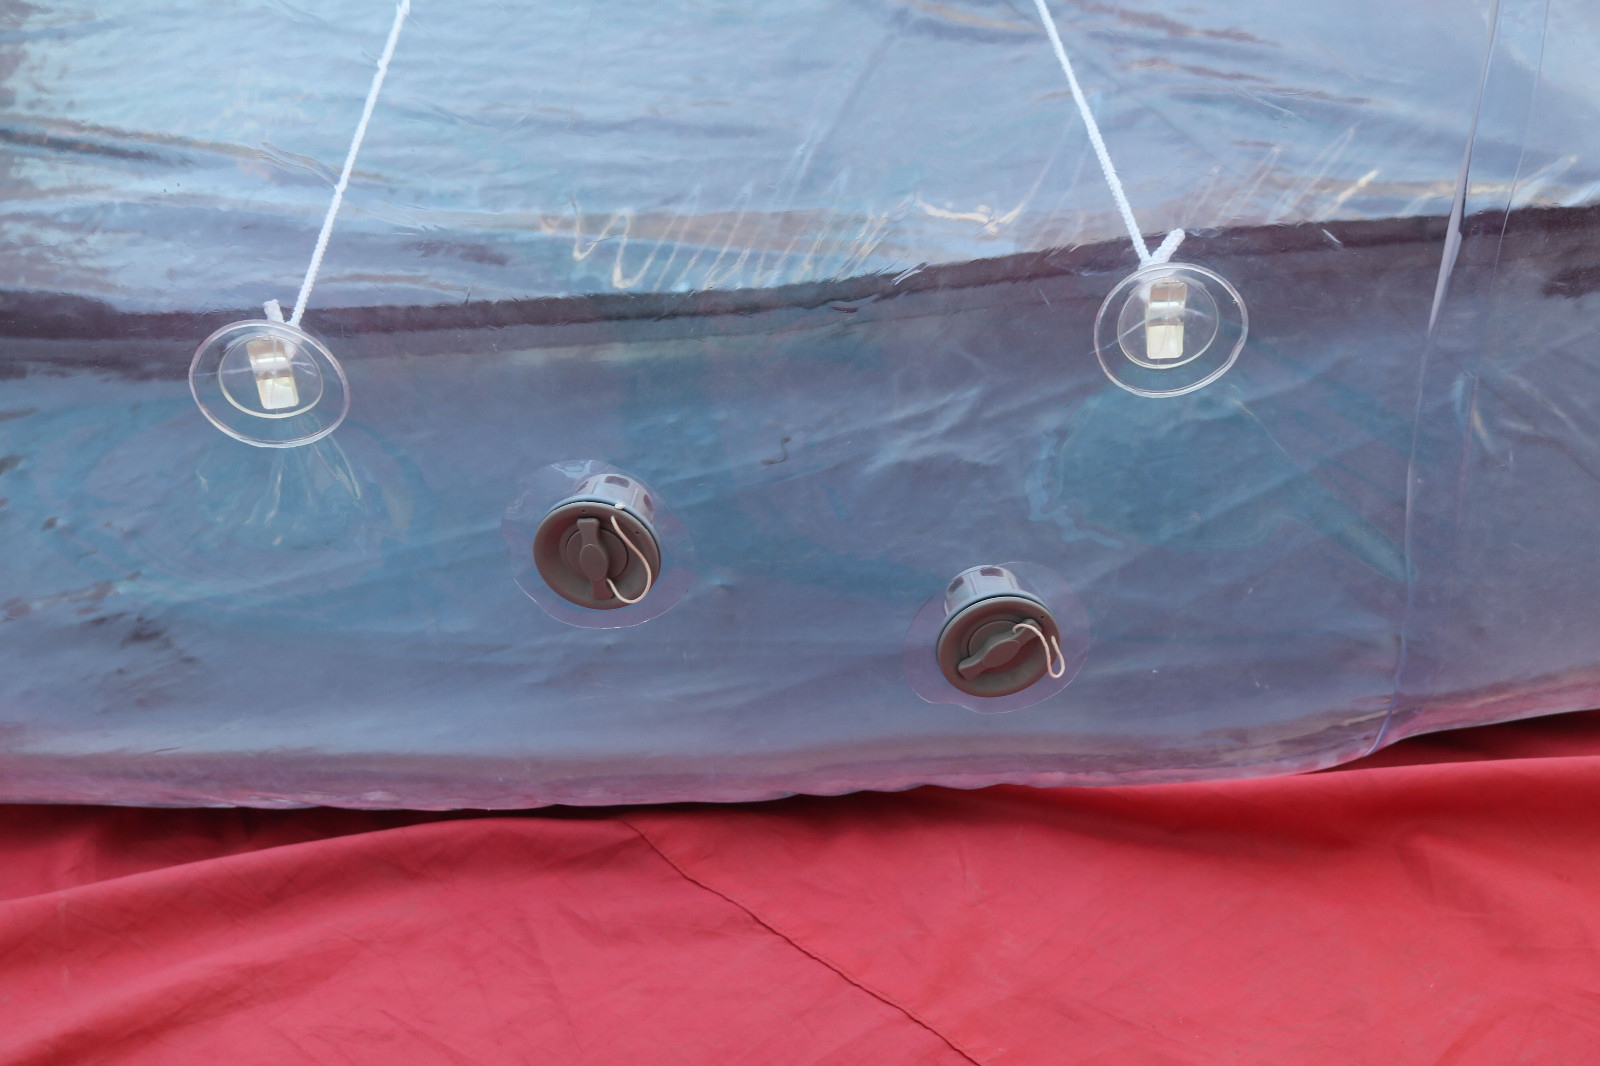 JOY Inflatable transparent bubble tent for sale factory price for children-12